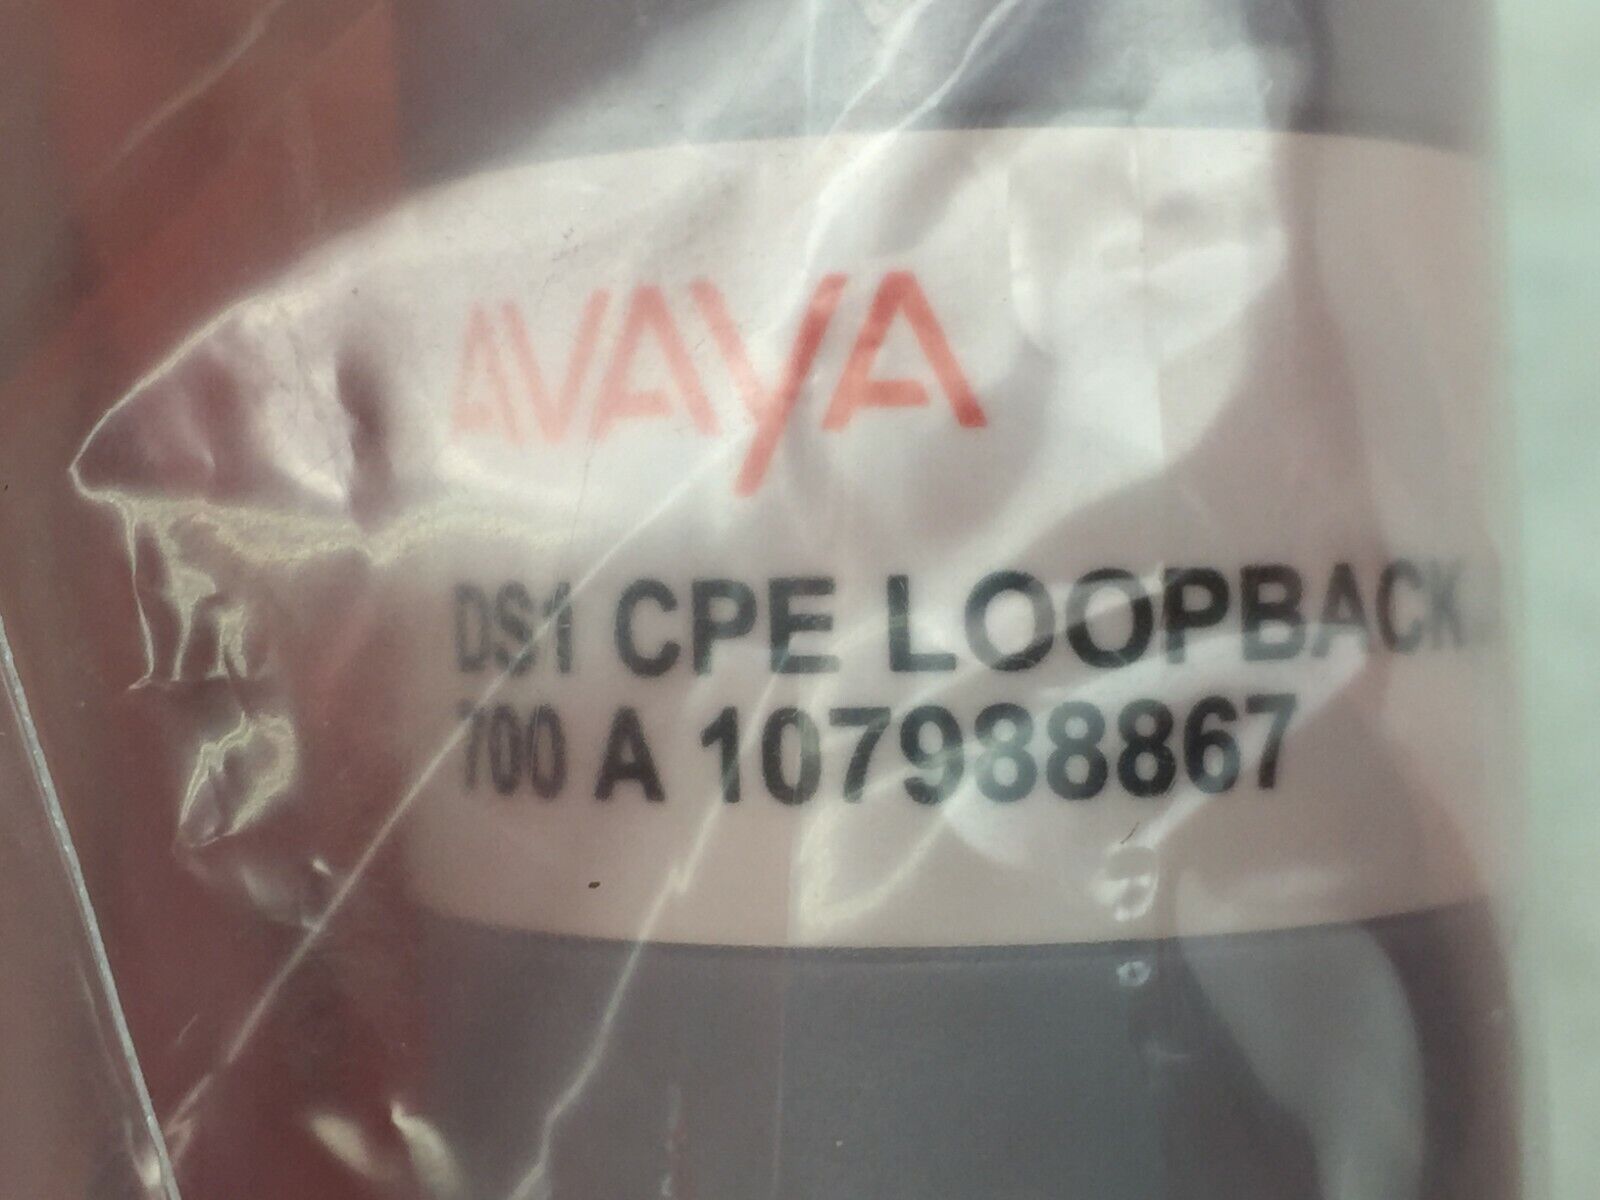 AVAYA DS1 CPE Loopback Jack 700 A 107988867